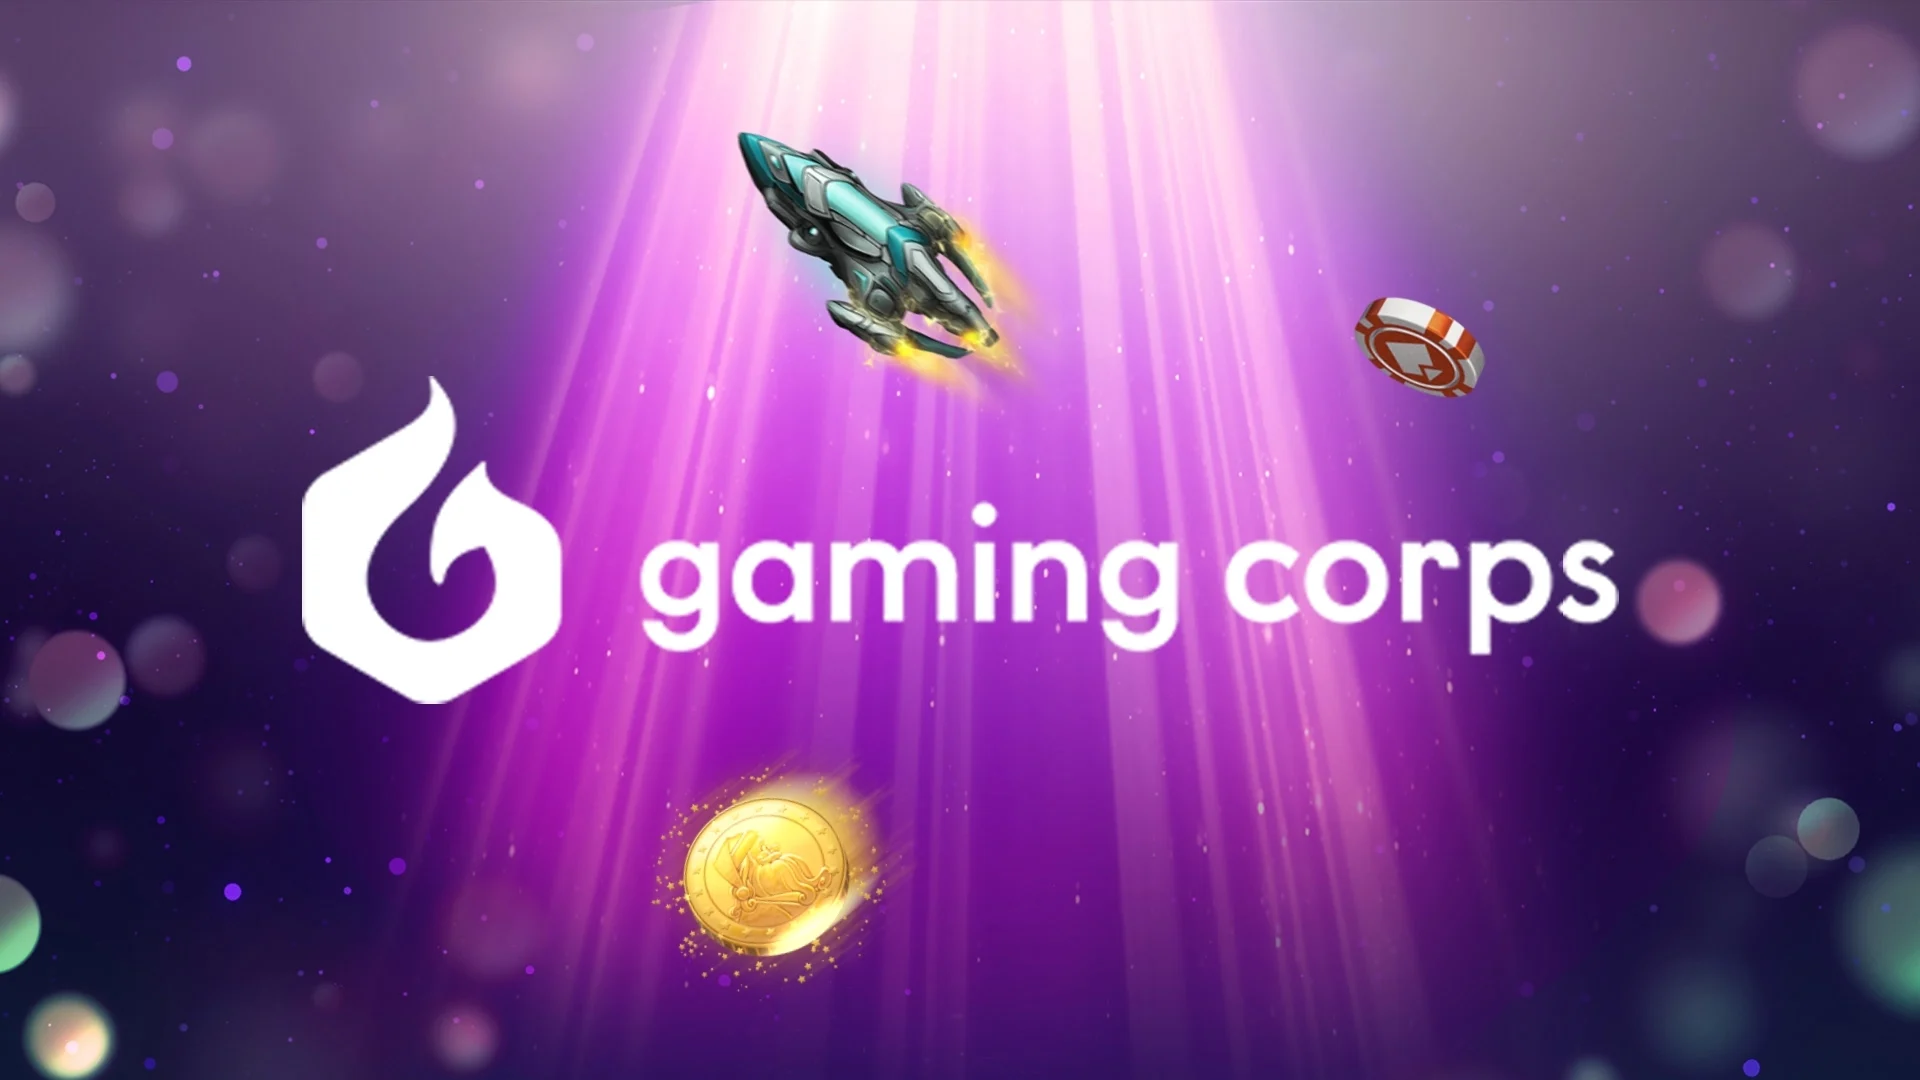 Gaming Corps - Romania's Gaming Market